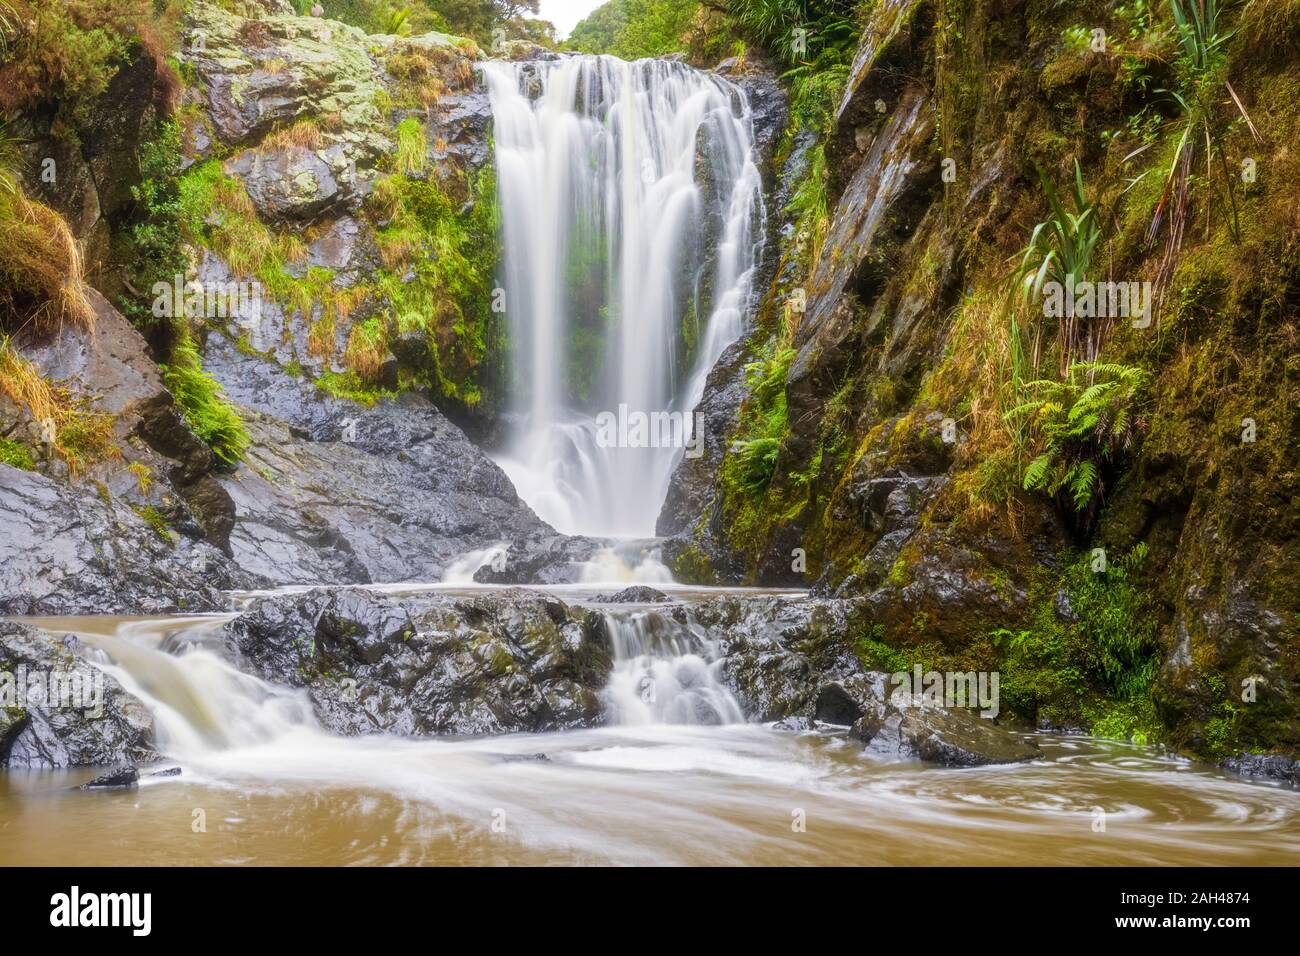 New Zealand, Northland Region, Long exposure of Piroa Falls on Ahuroa River Stock Photo